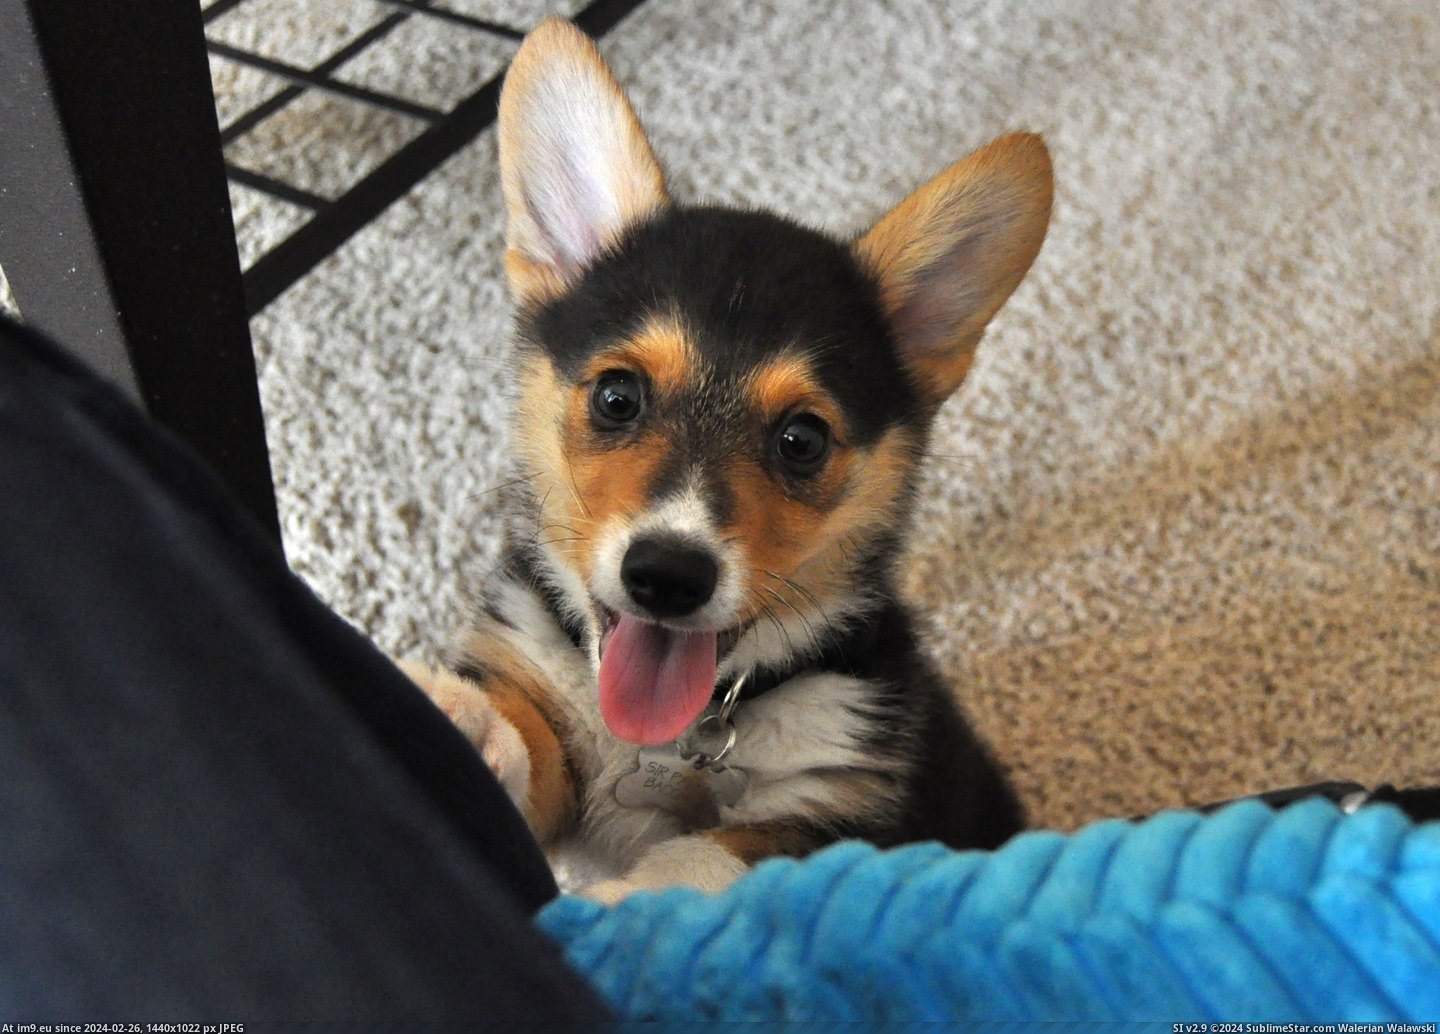 #Puppy #Pancake #Corgi [Aww] This is my corgi puppy, Pancake. 5 Pic. (Bild von album My r/AWW favs))